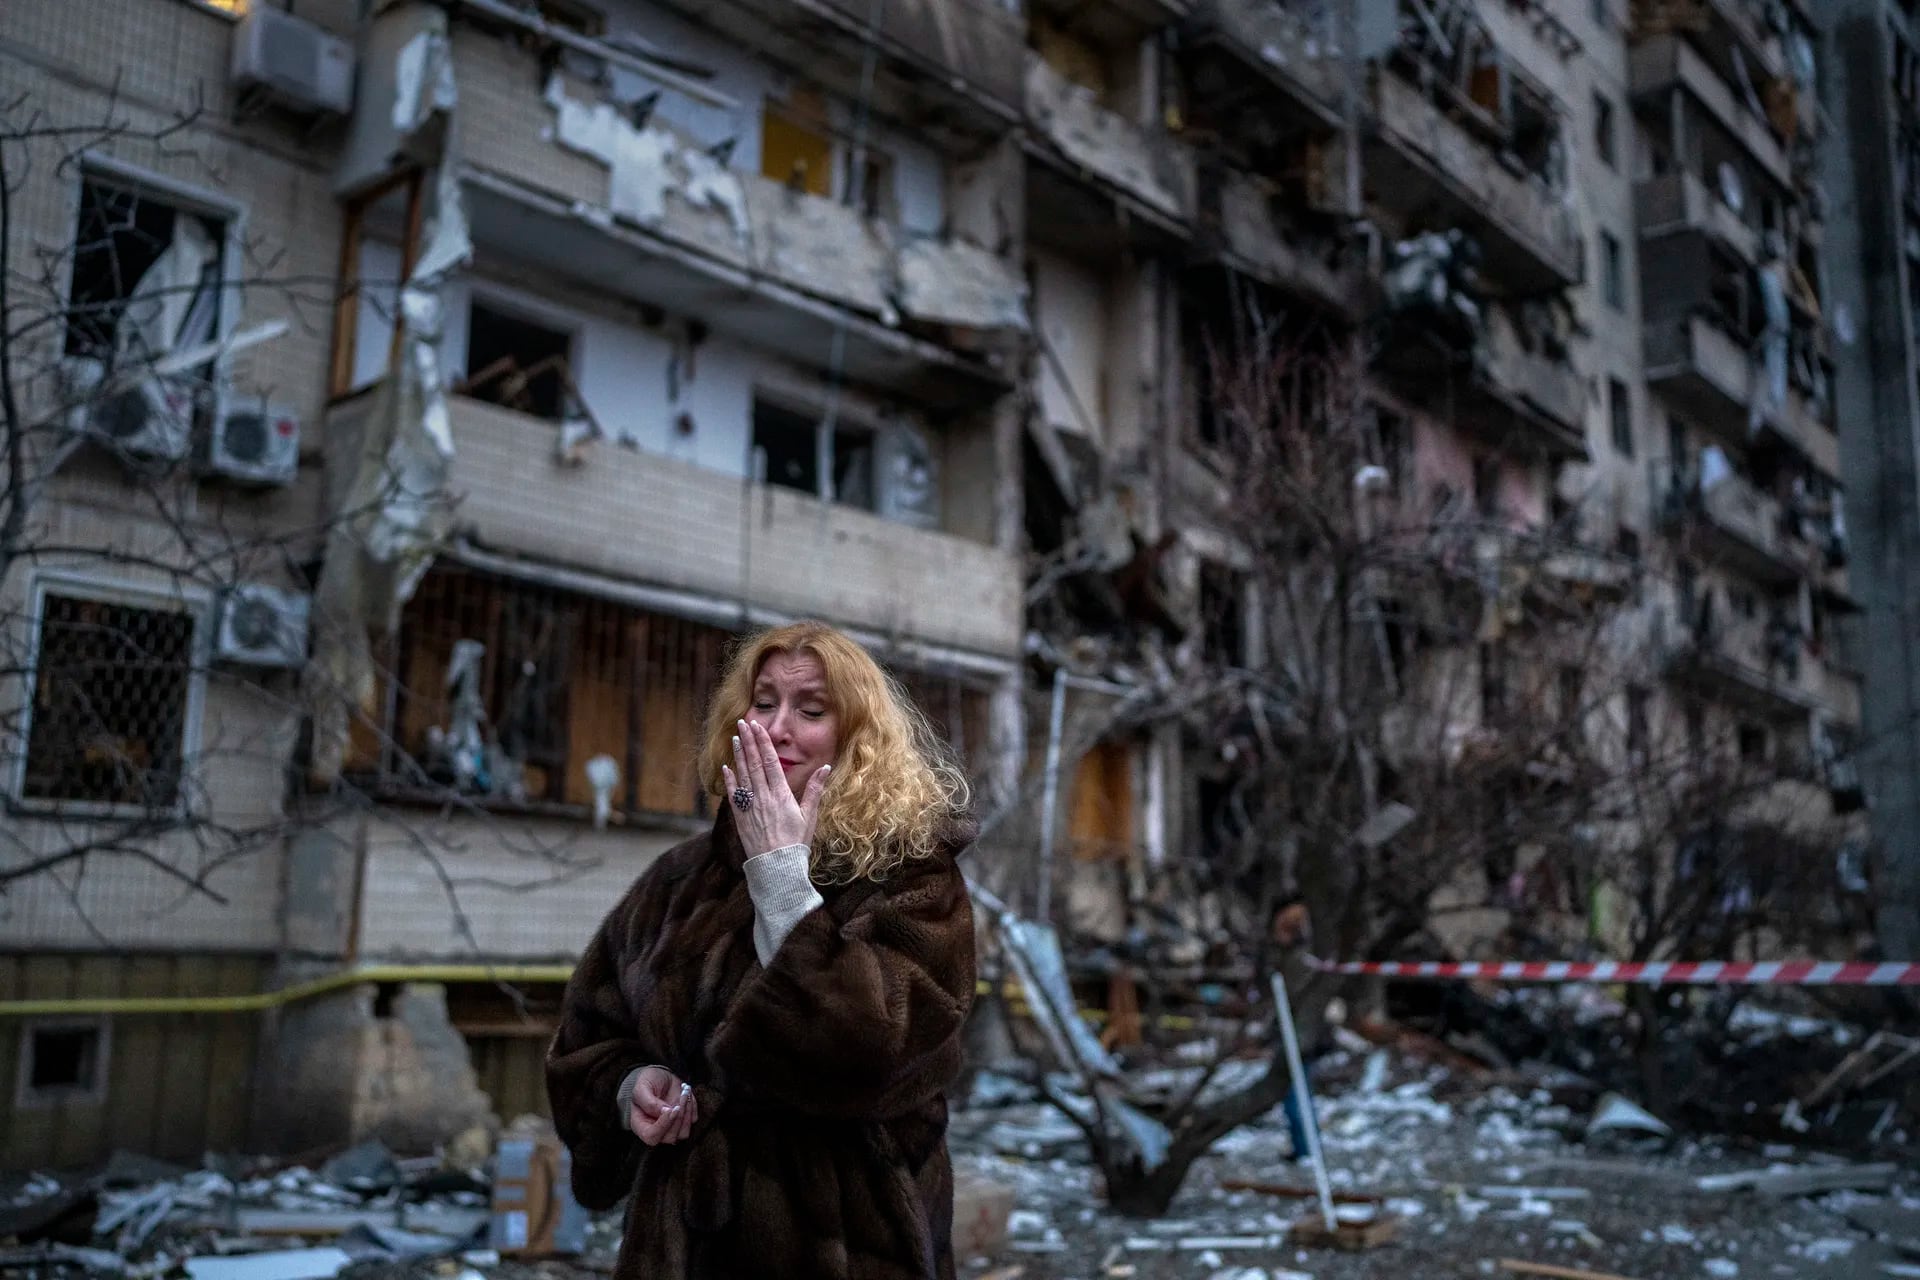 Natali Sevriukova after a shell attack in the city of Kiev, Ukraine